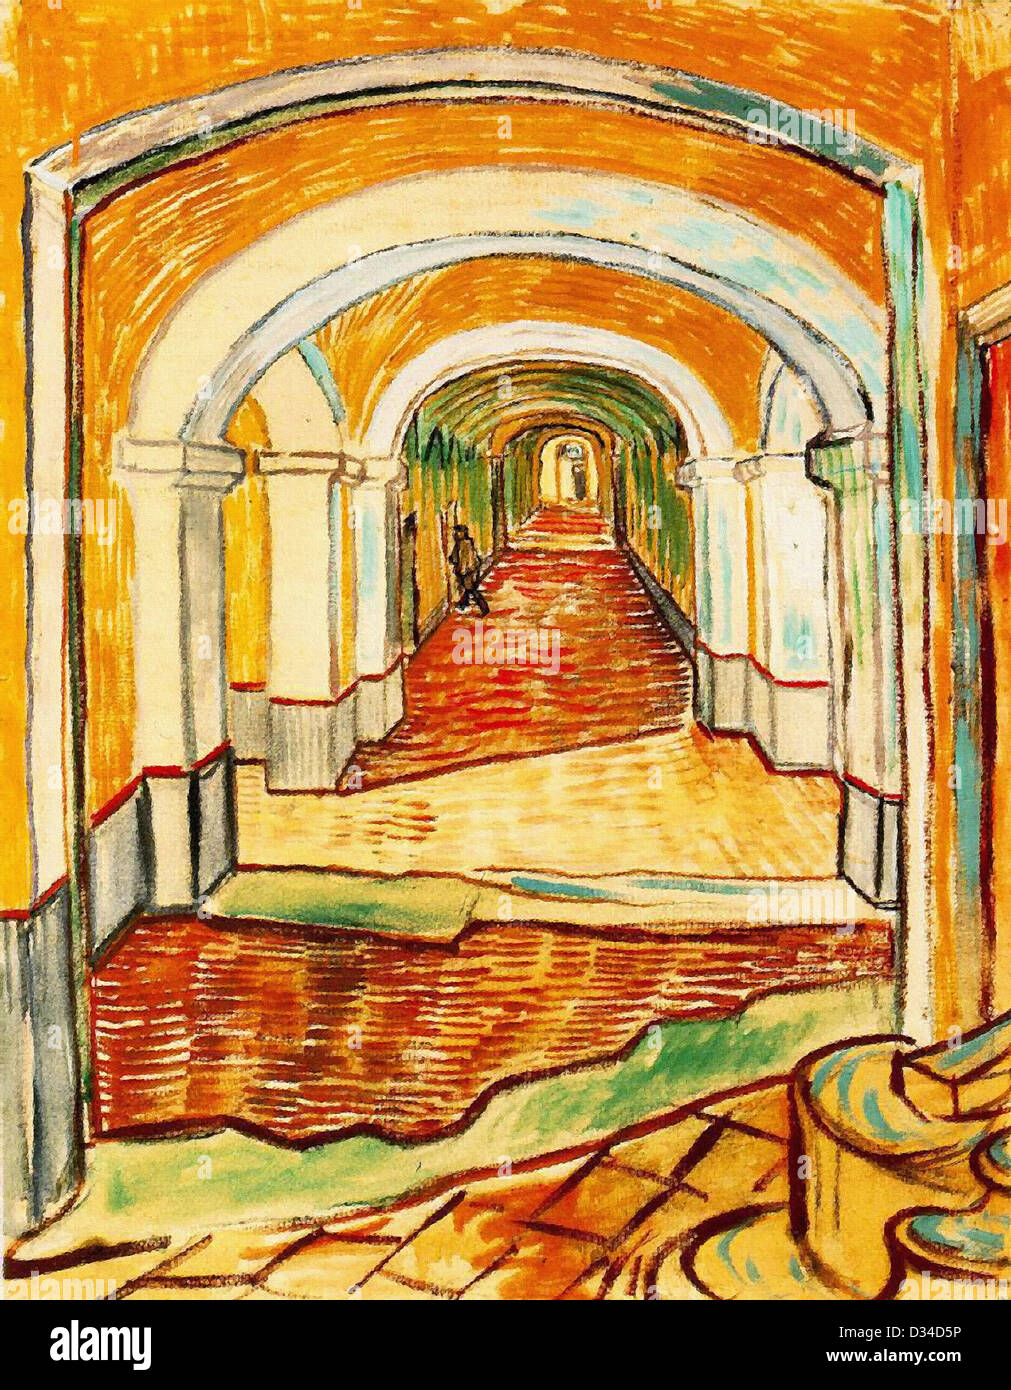 Vincent van Gogh, Corridor in the asylum. 1889. Post-Impressionism. Oil on canvas. Museum of Modern Art, New York, USA. Stock Photo